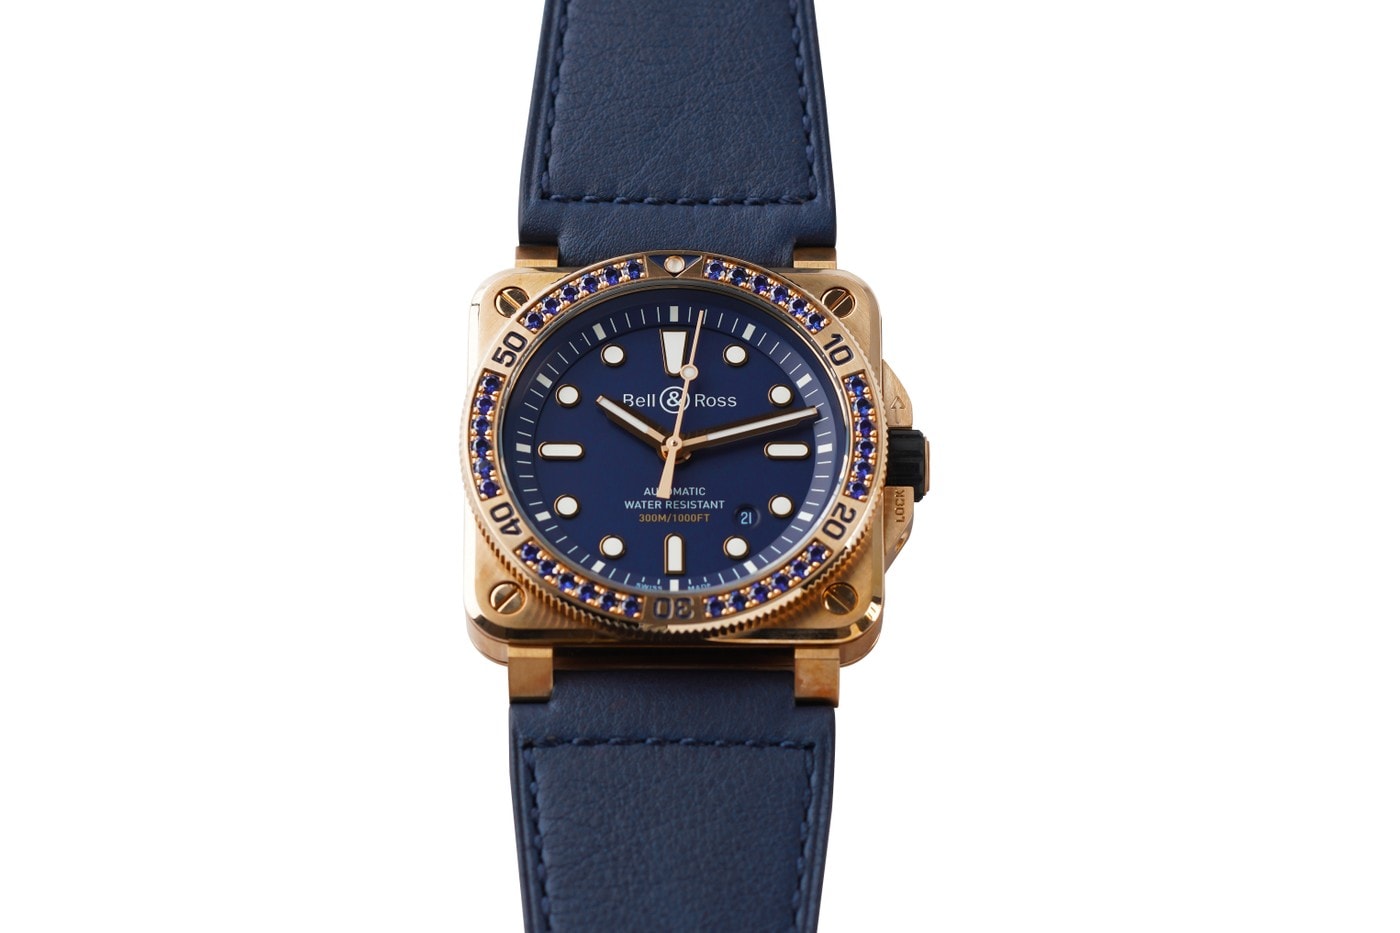 Bell & Ross 全新 BR03-92 青銅藍寶石潛水腕錶發佈